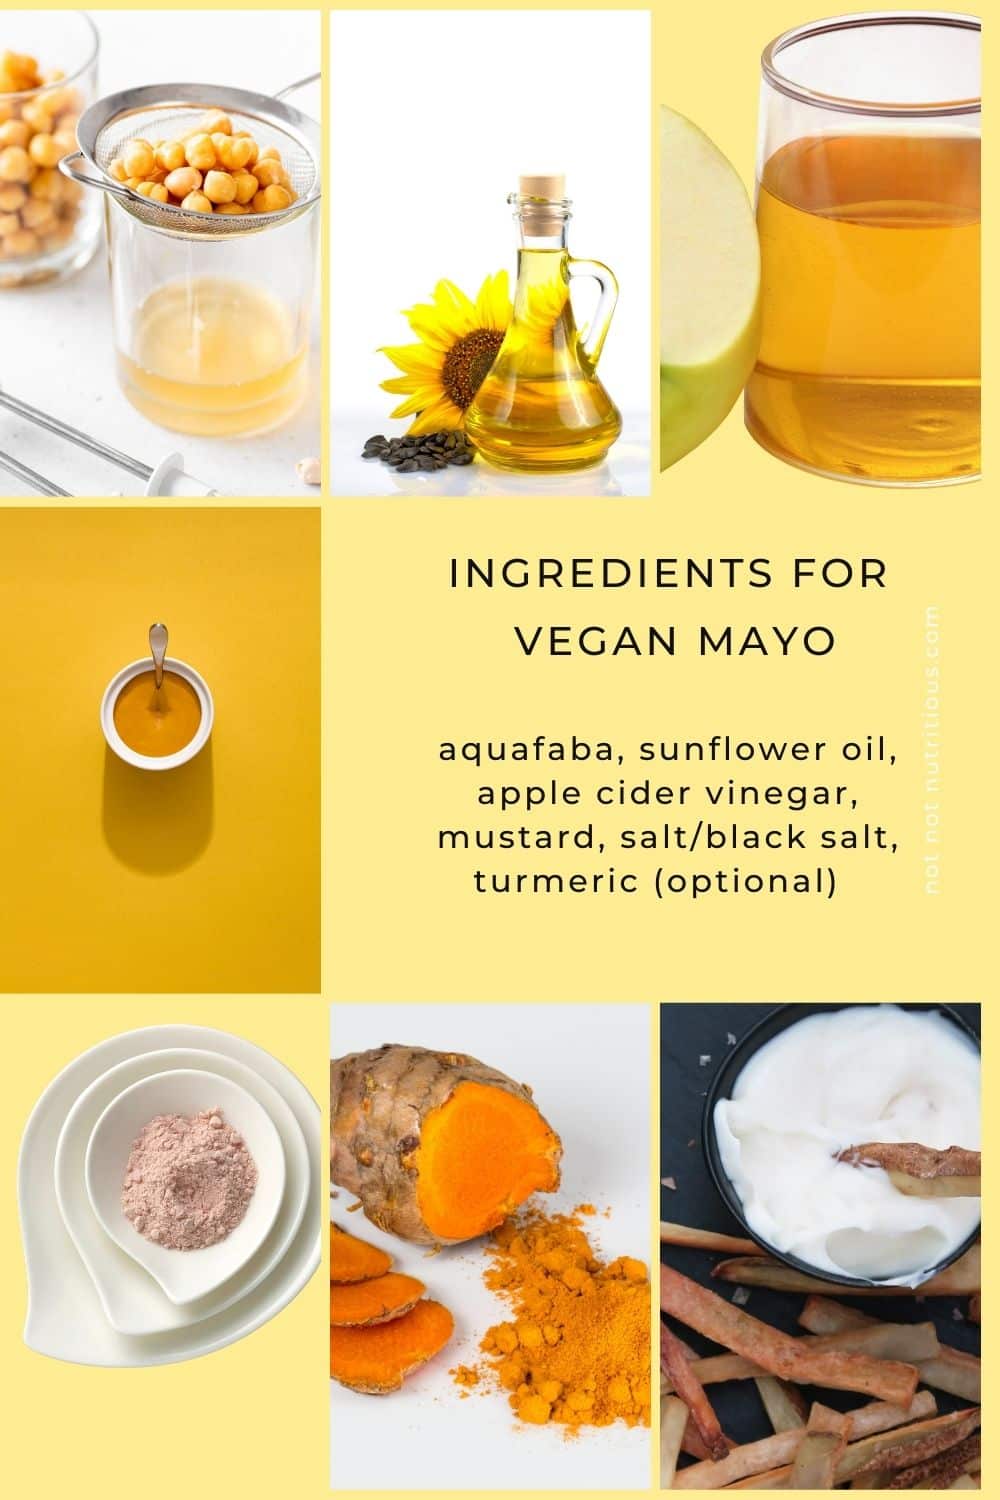 Infographic with ingredients for Vegan Mayonnaise: aquafaba, sunflower oil, apple cider vinegar, mustard, salt or black/salt, turmeric 